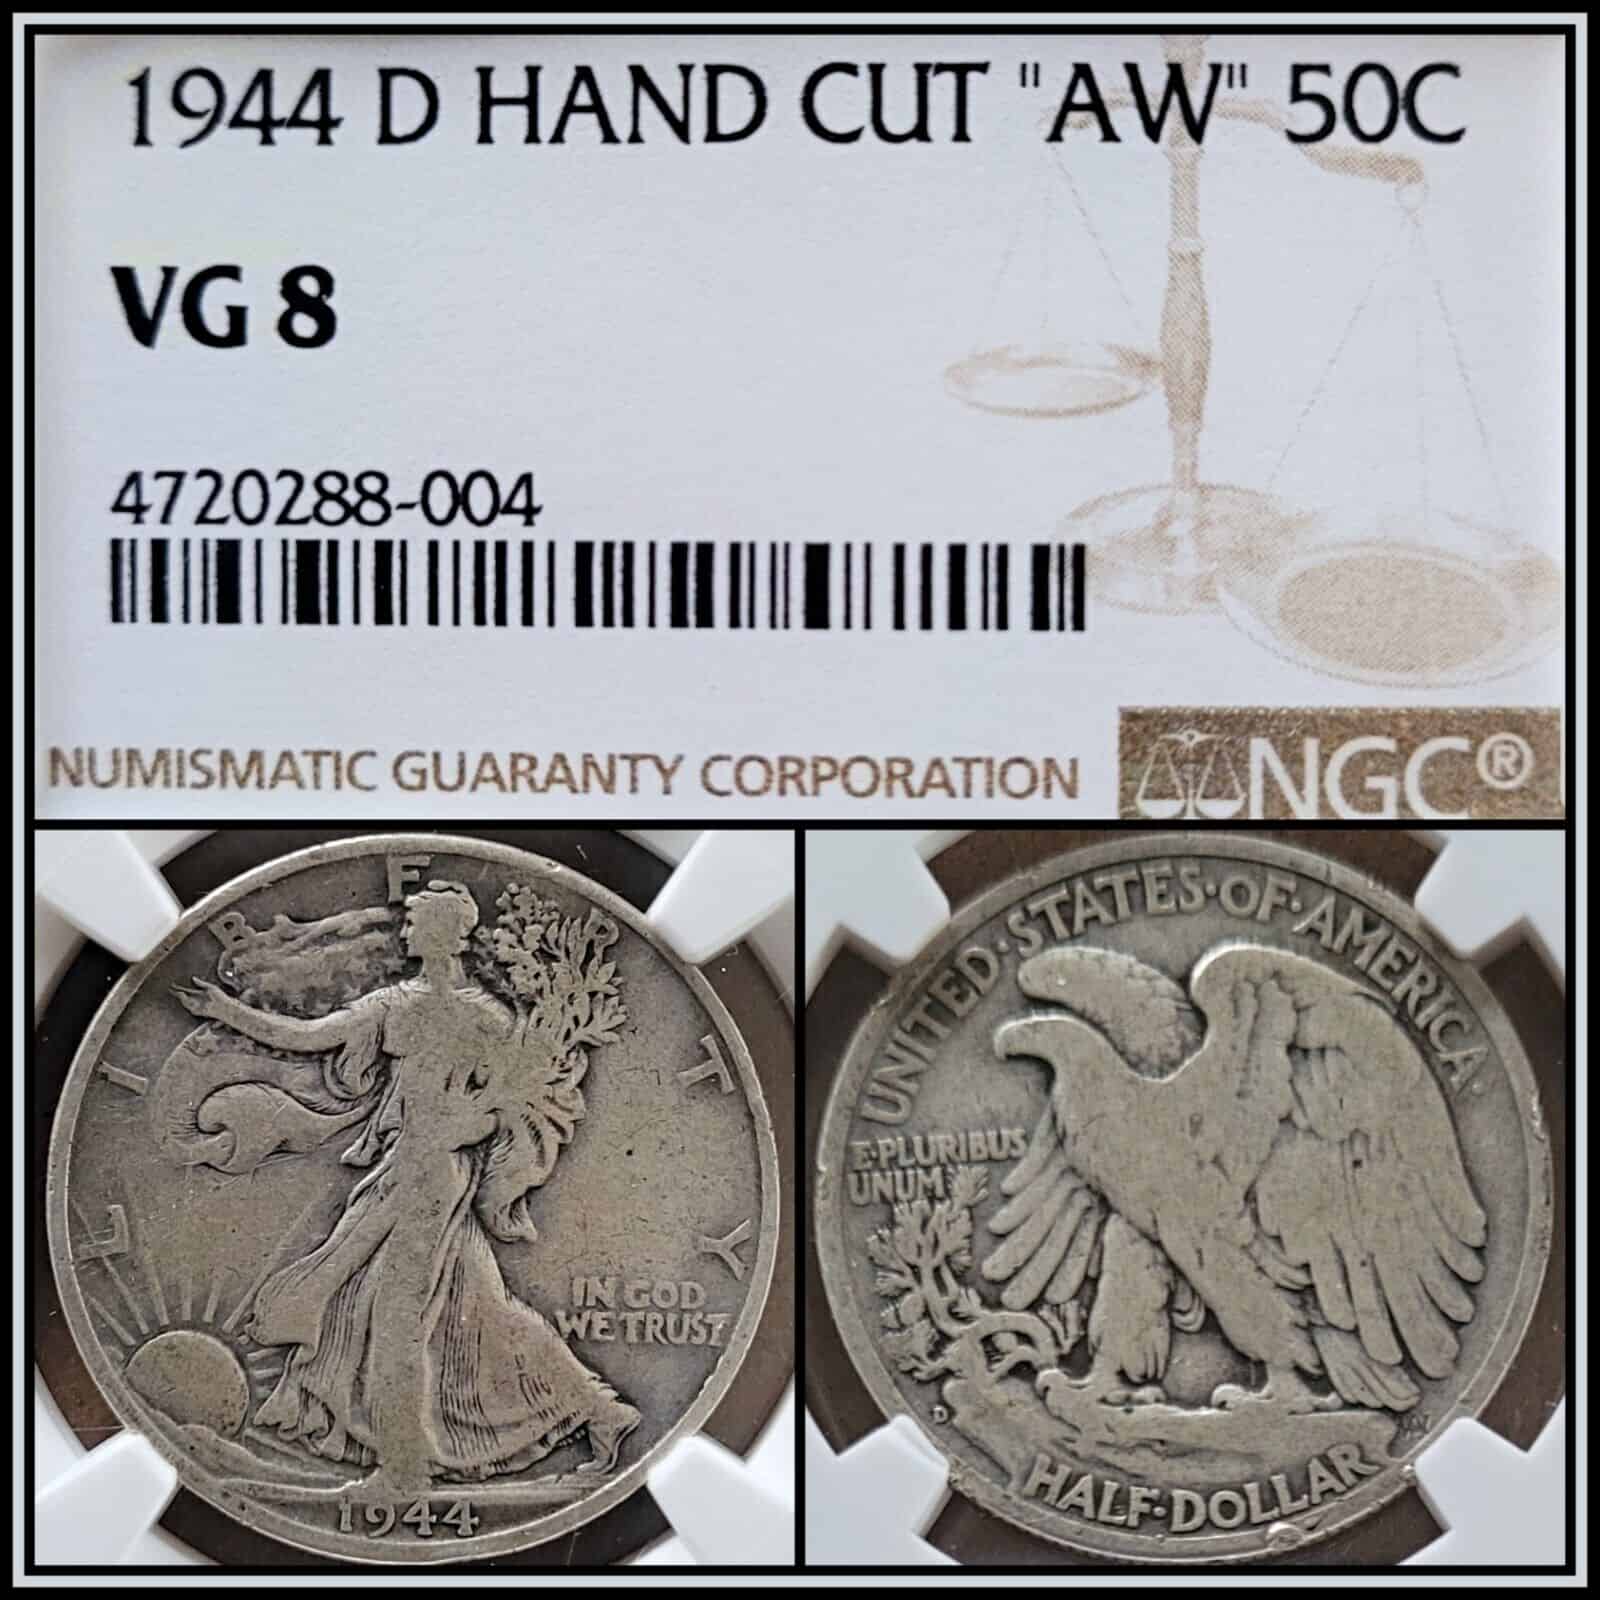 1944 Walking Liberty Half-Dollar Hand Cut AW Variety